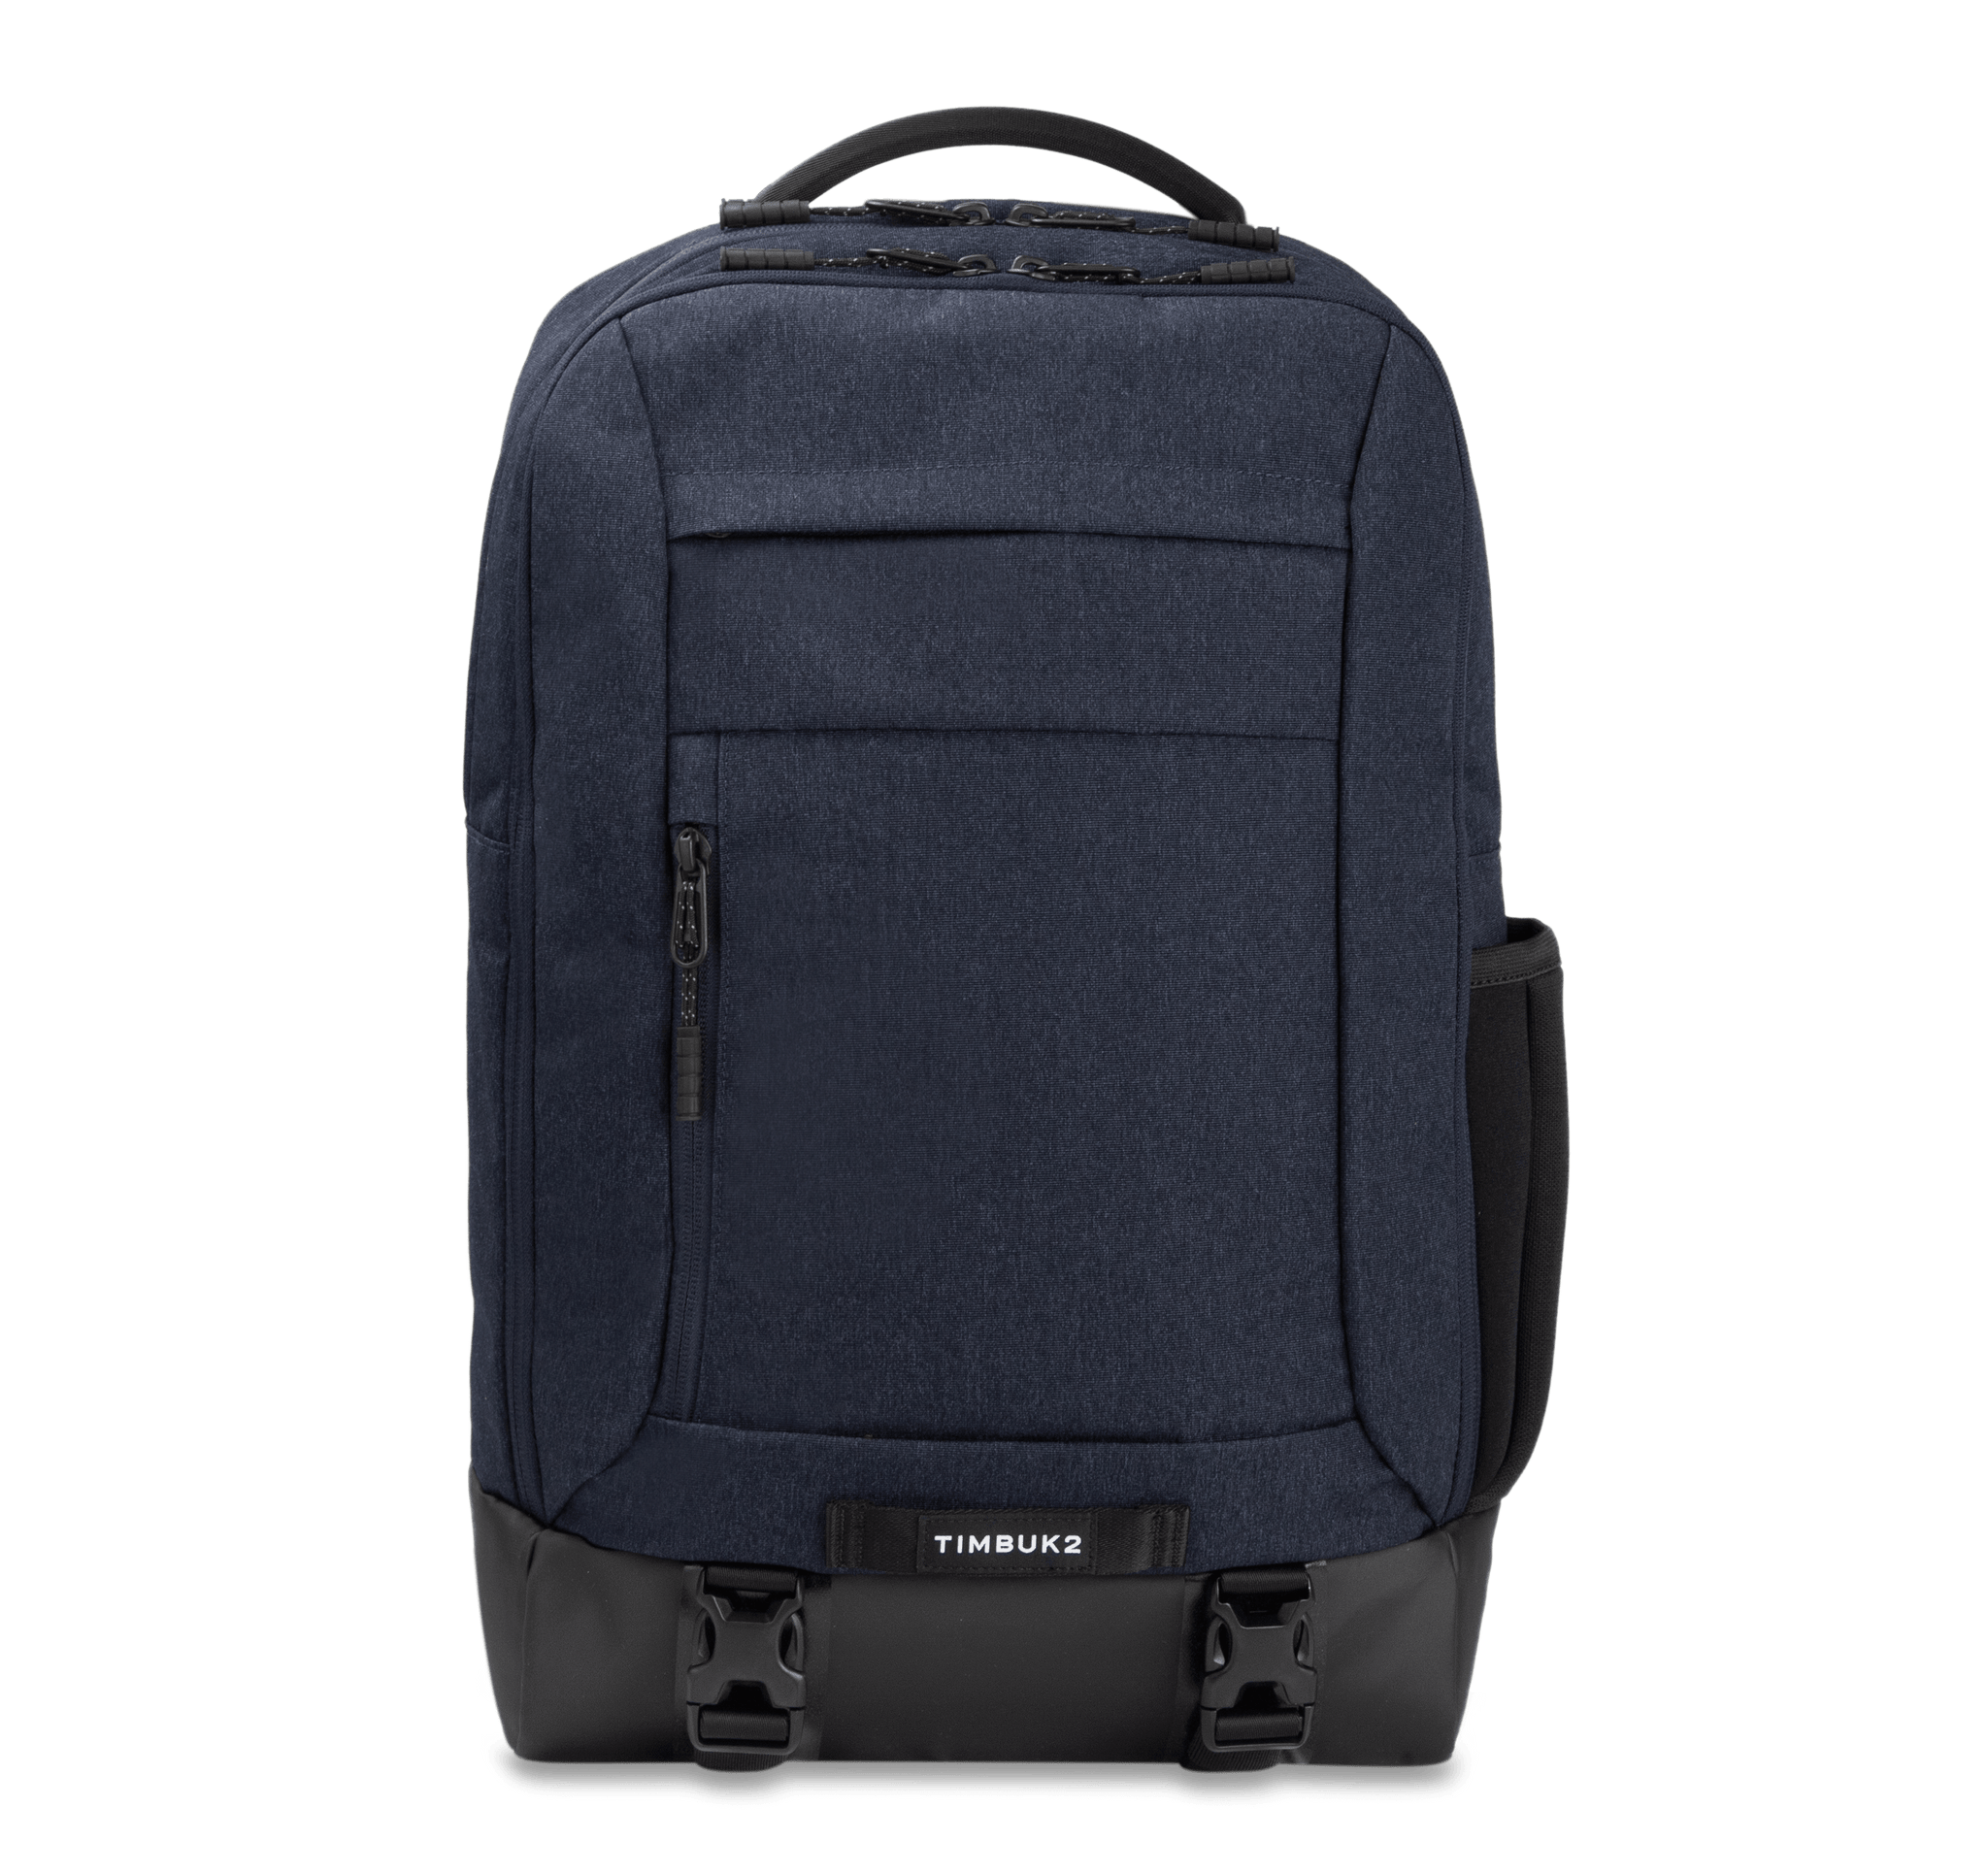 Timbuk2 Bags One Size / Eco Nightfall Timbuk2 - Authority Laptop Backpack Deluxe